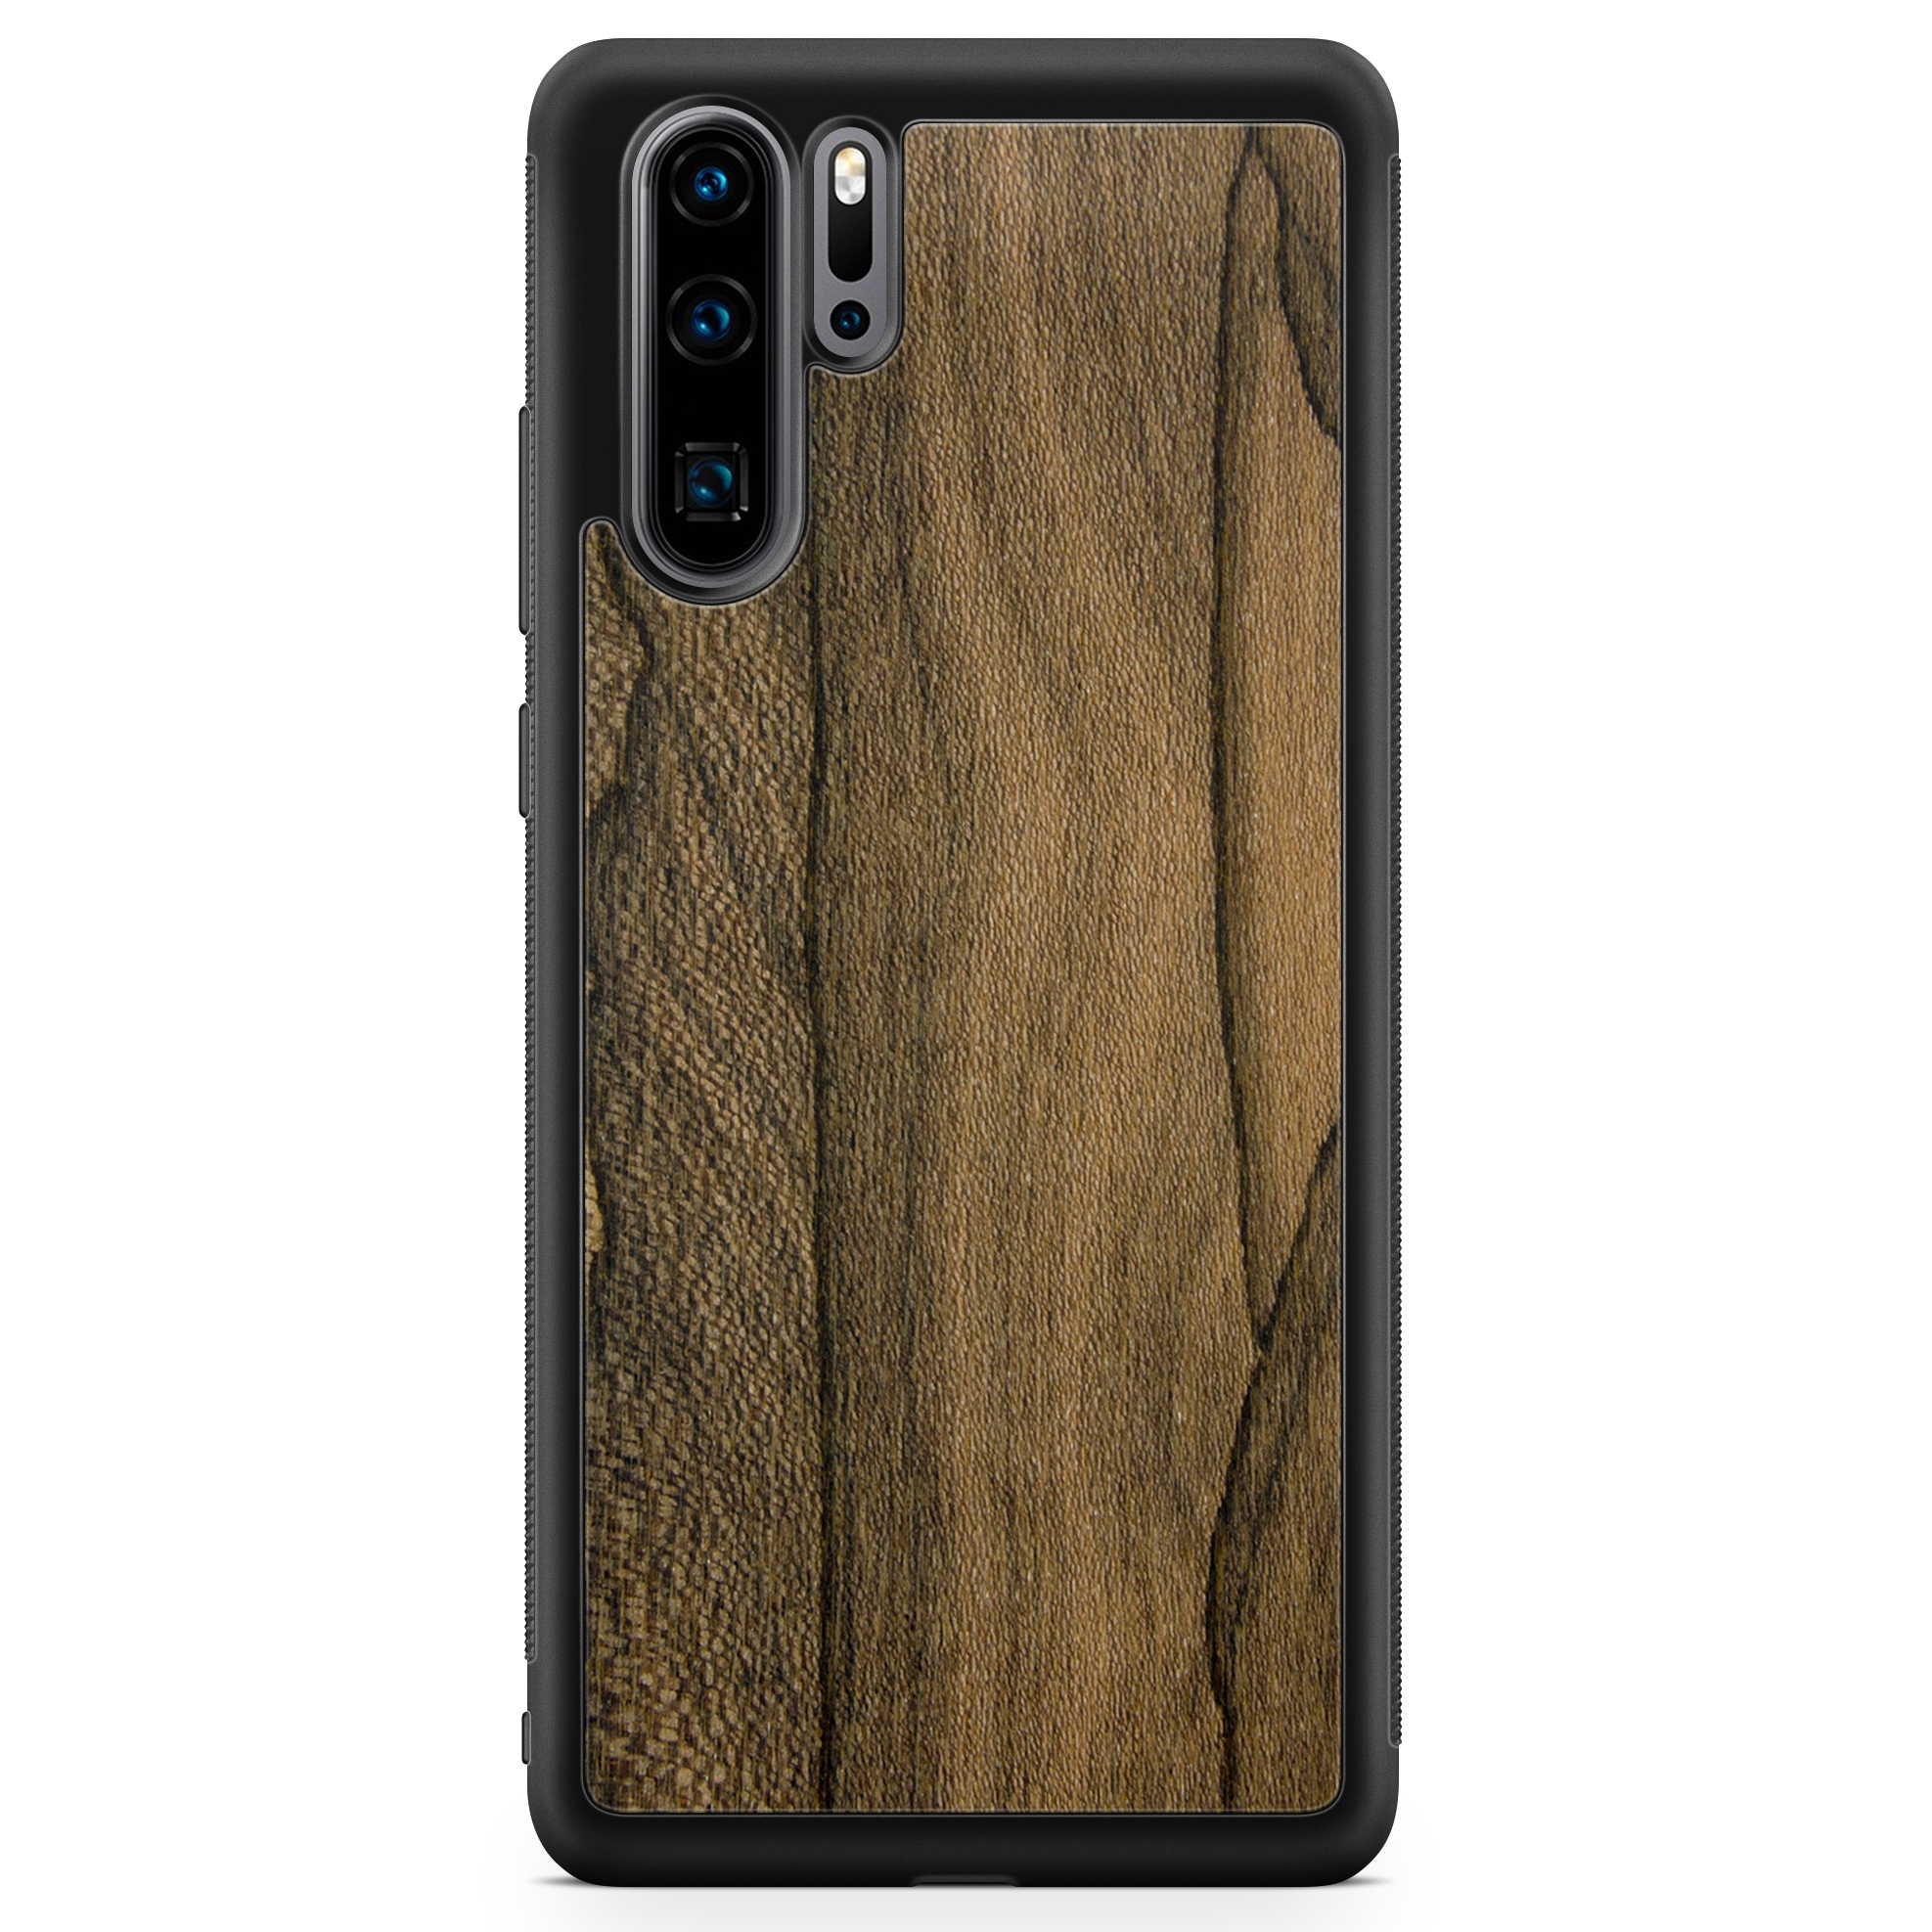  Ziricote Wood Huawei P30 Pro Phone Case 